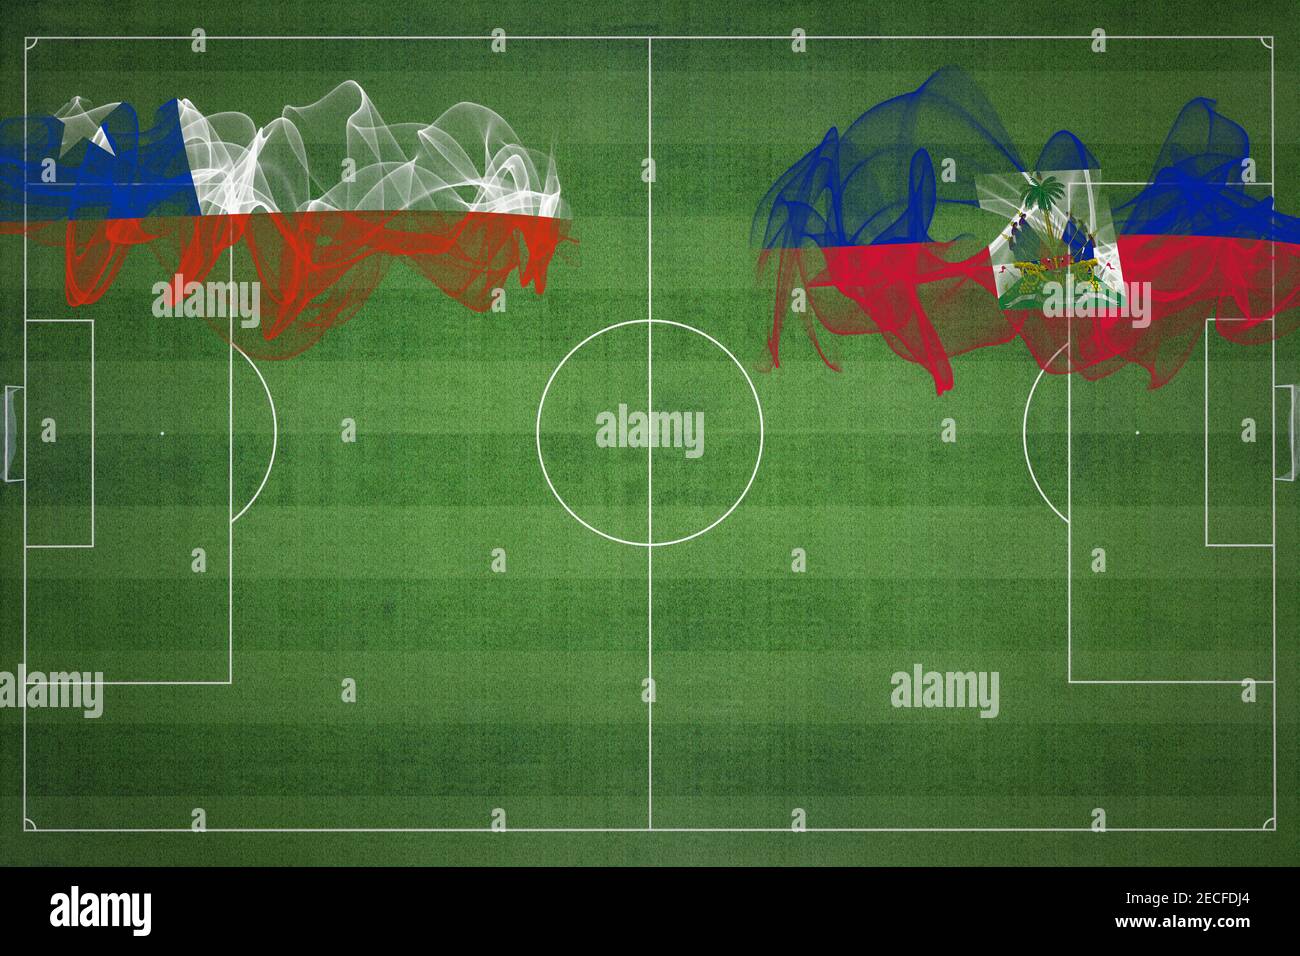 Chile vs Haiti Fußballspiel, Nationalfarben, Nationalflaggen, Fußballfeld, Fußballspiel, Wettbewerbskonzept, Kopierraum Stockfoto